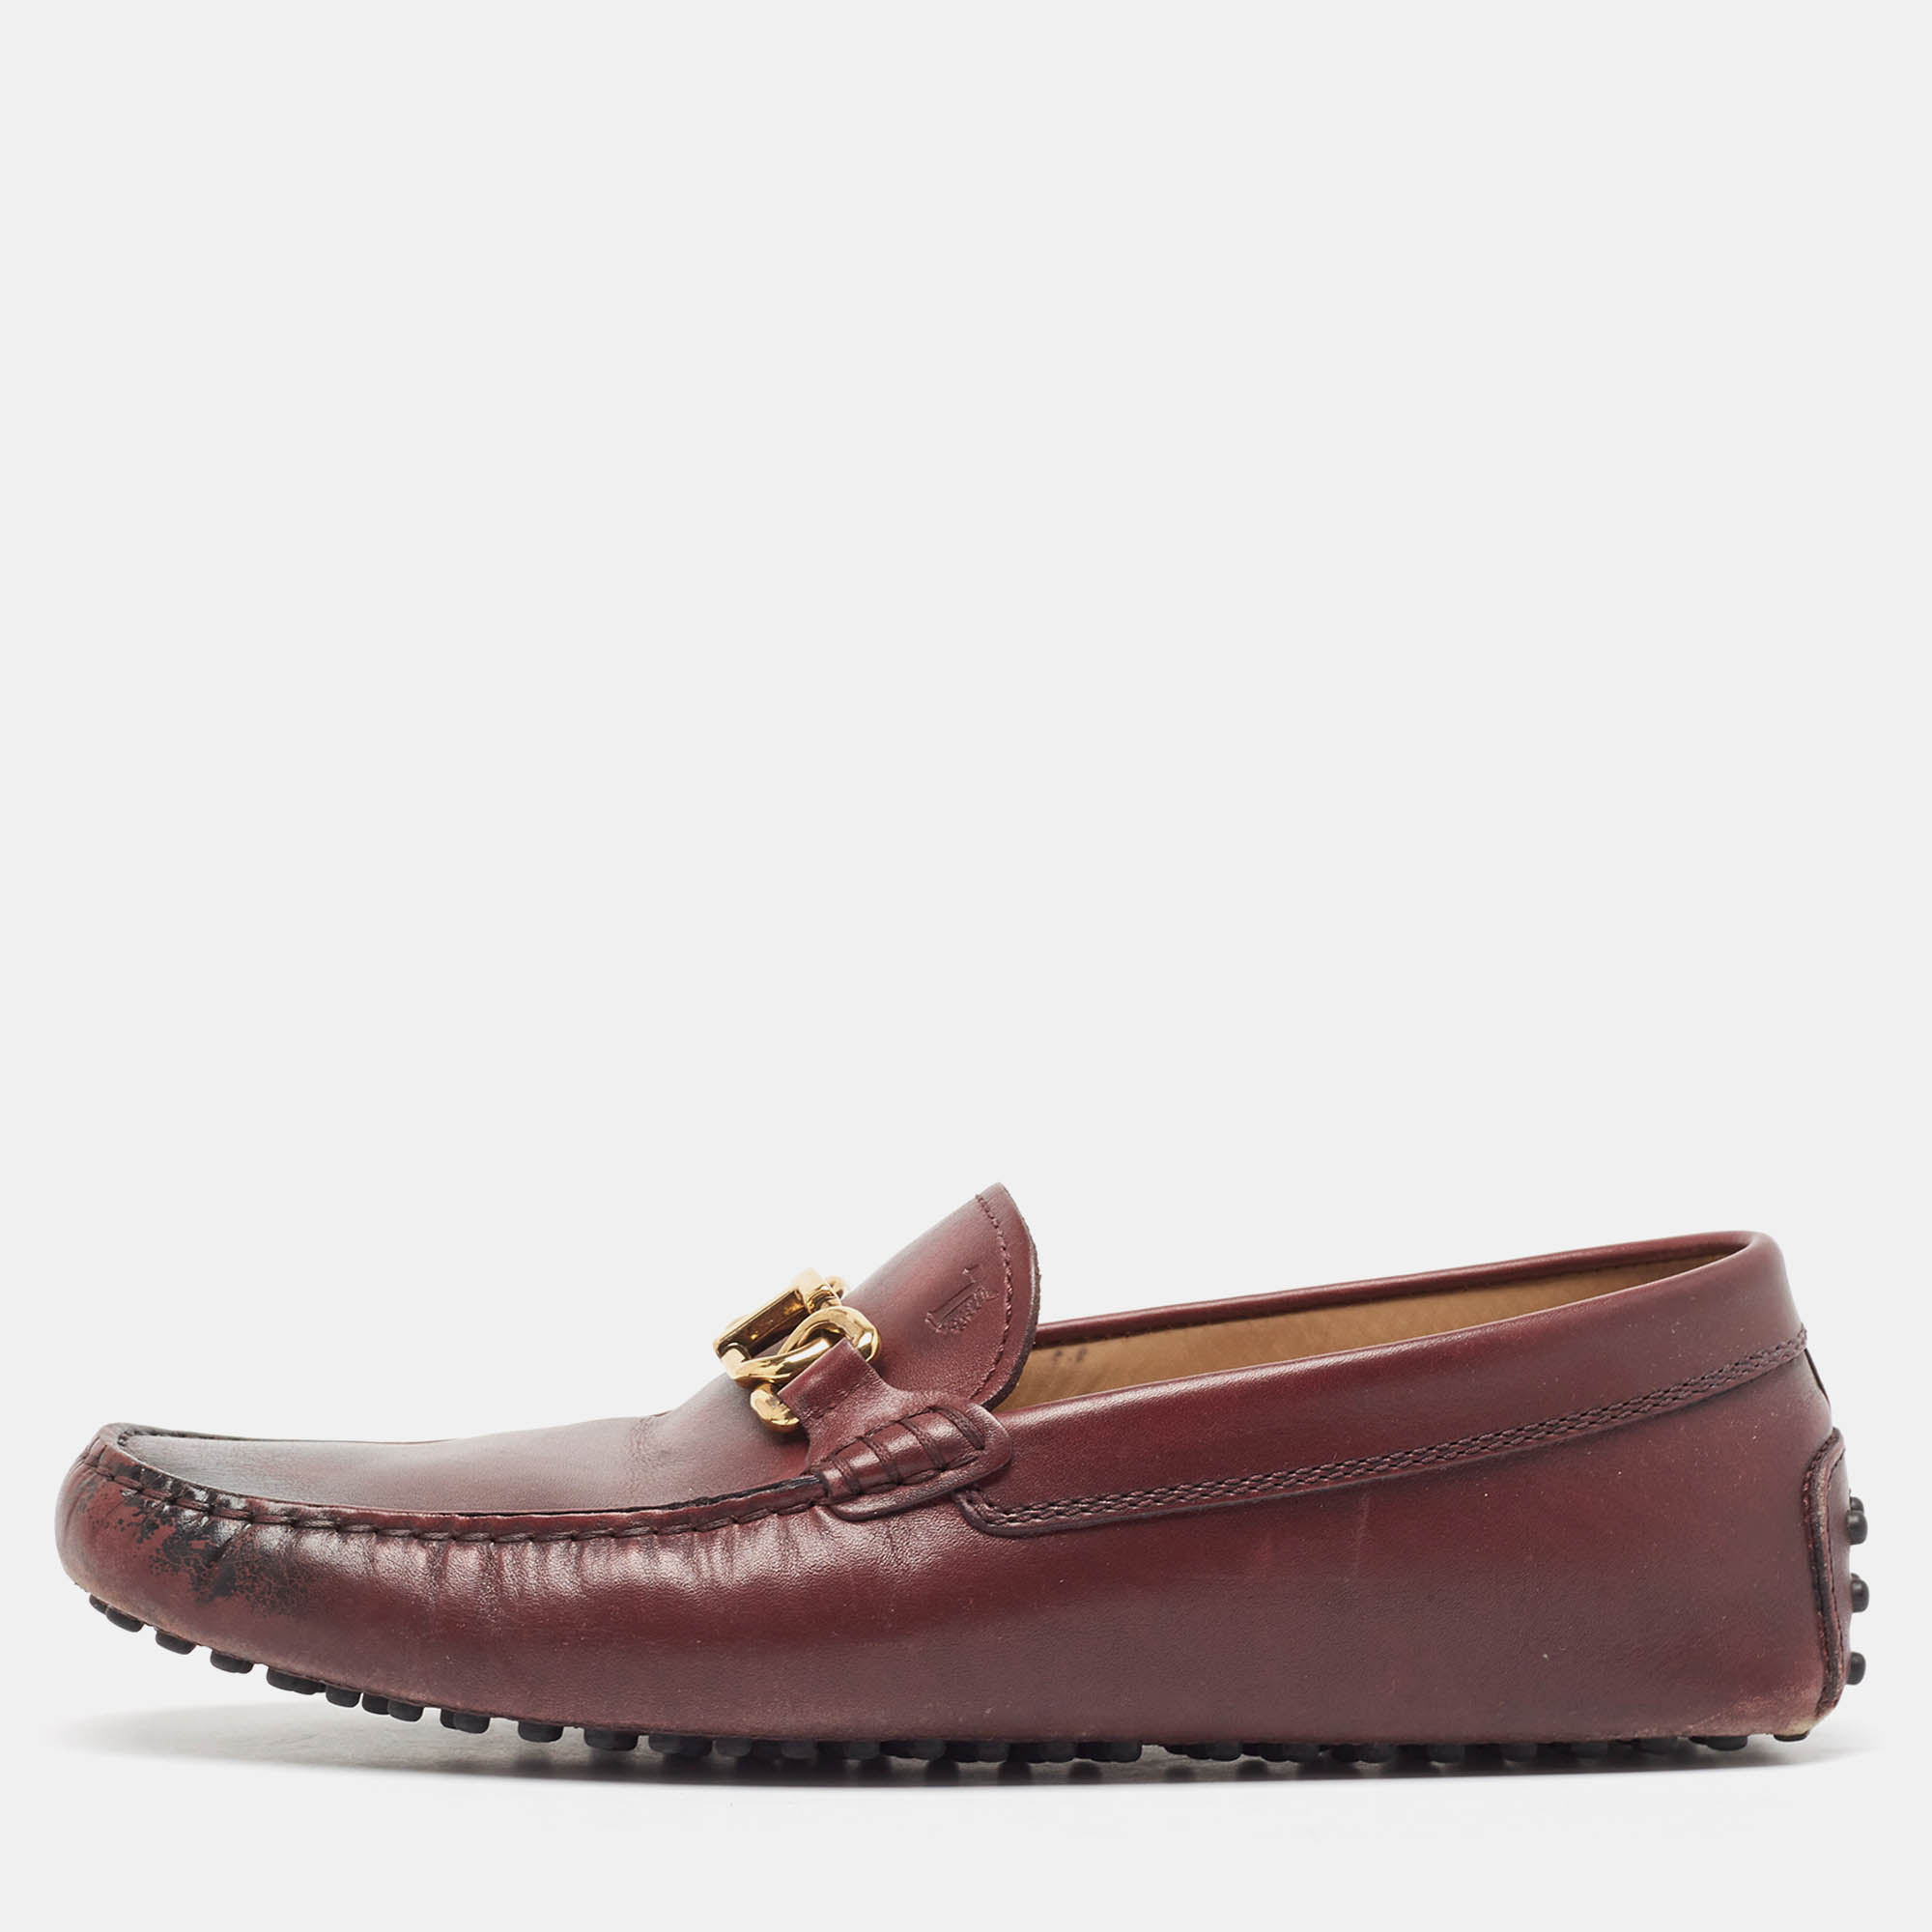 Salvatore ferragamo burgundy leather slip on loafers size 40.5